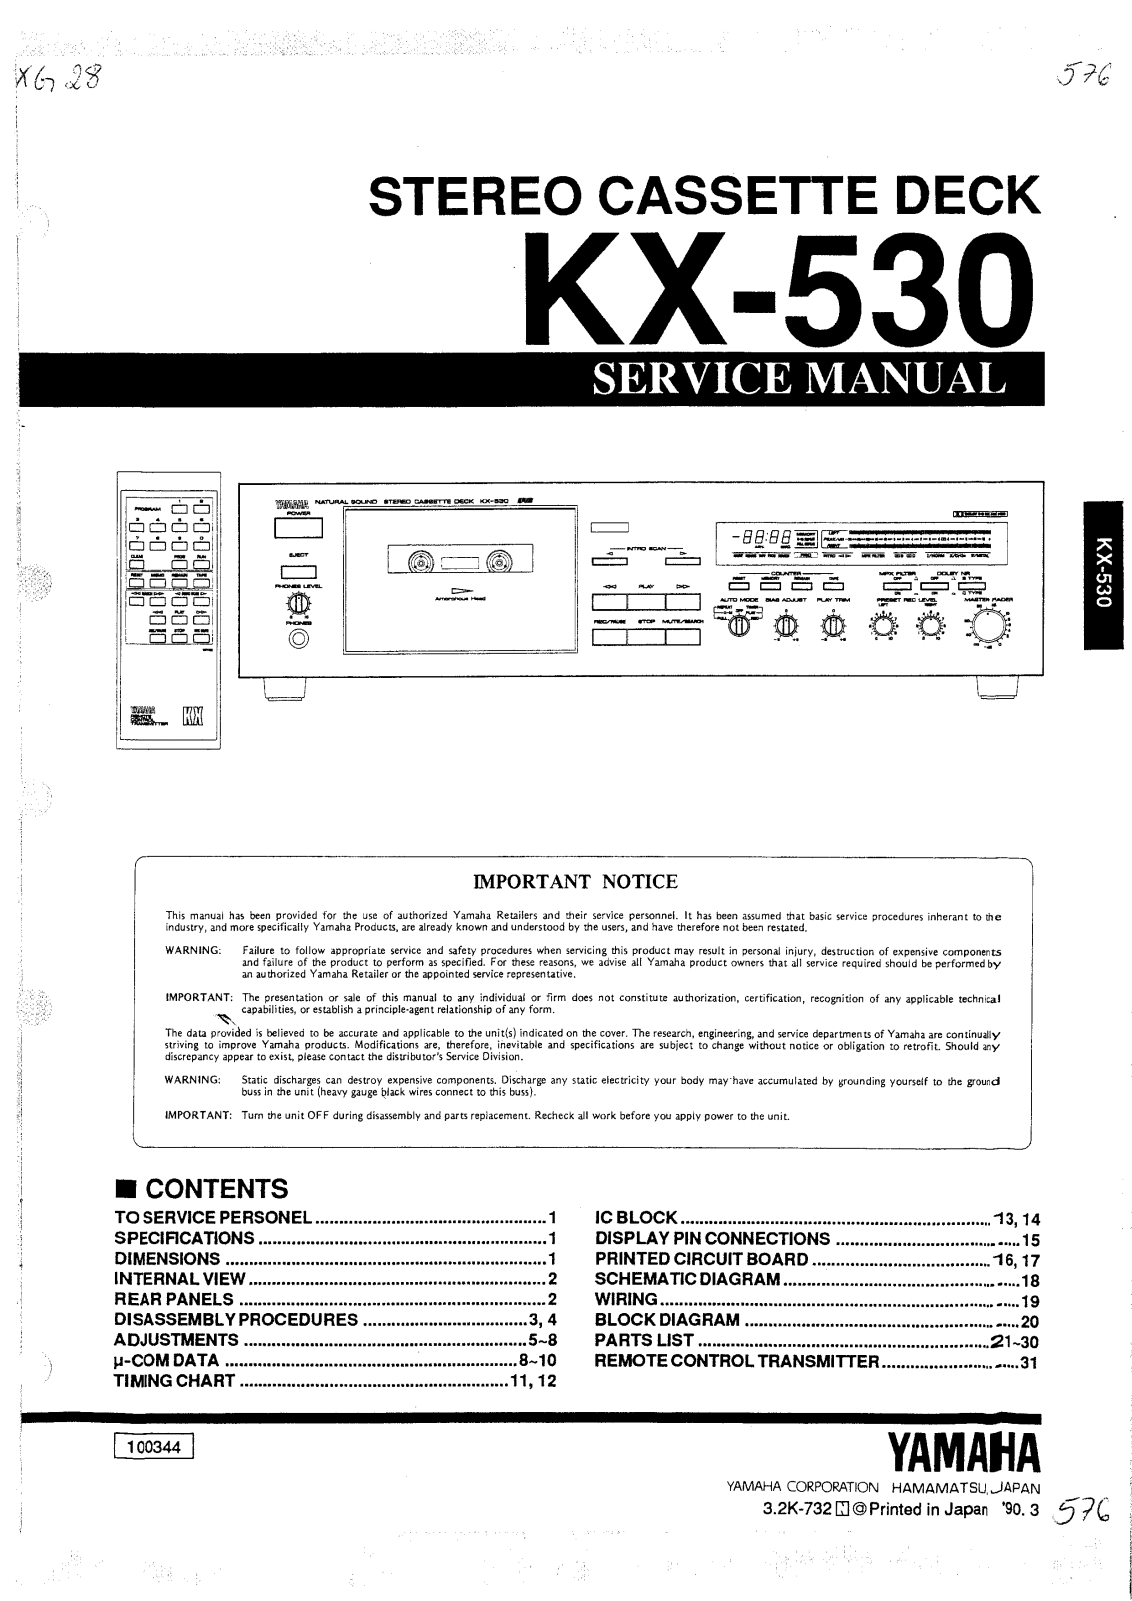 Yamaha KX-530 Service Manual